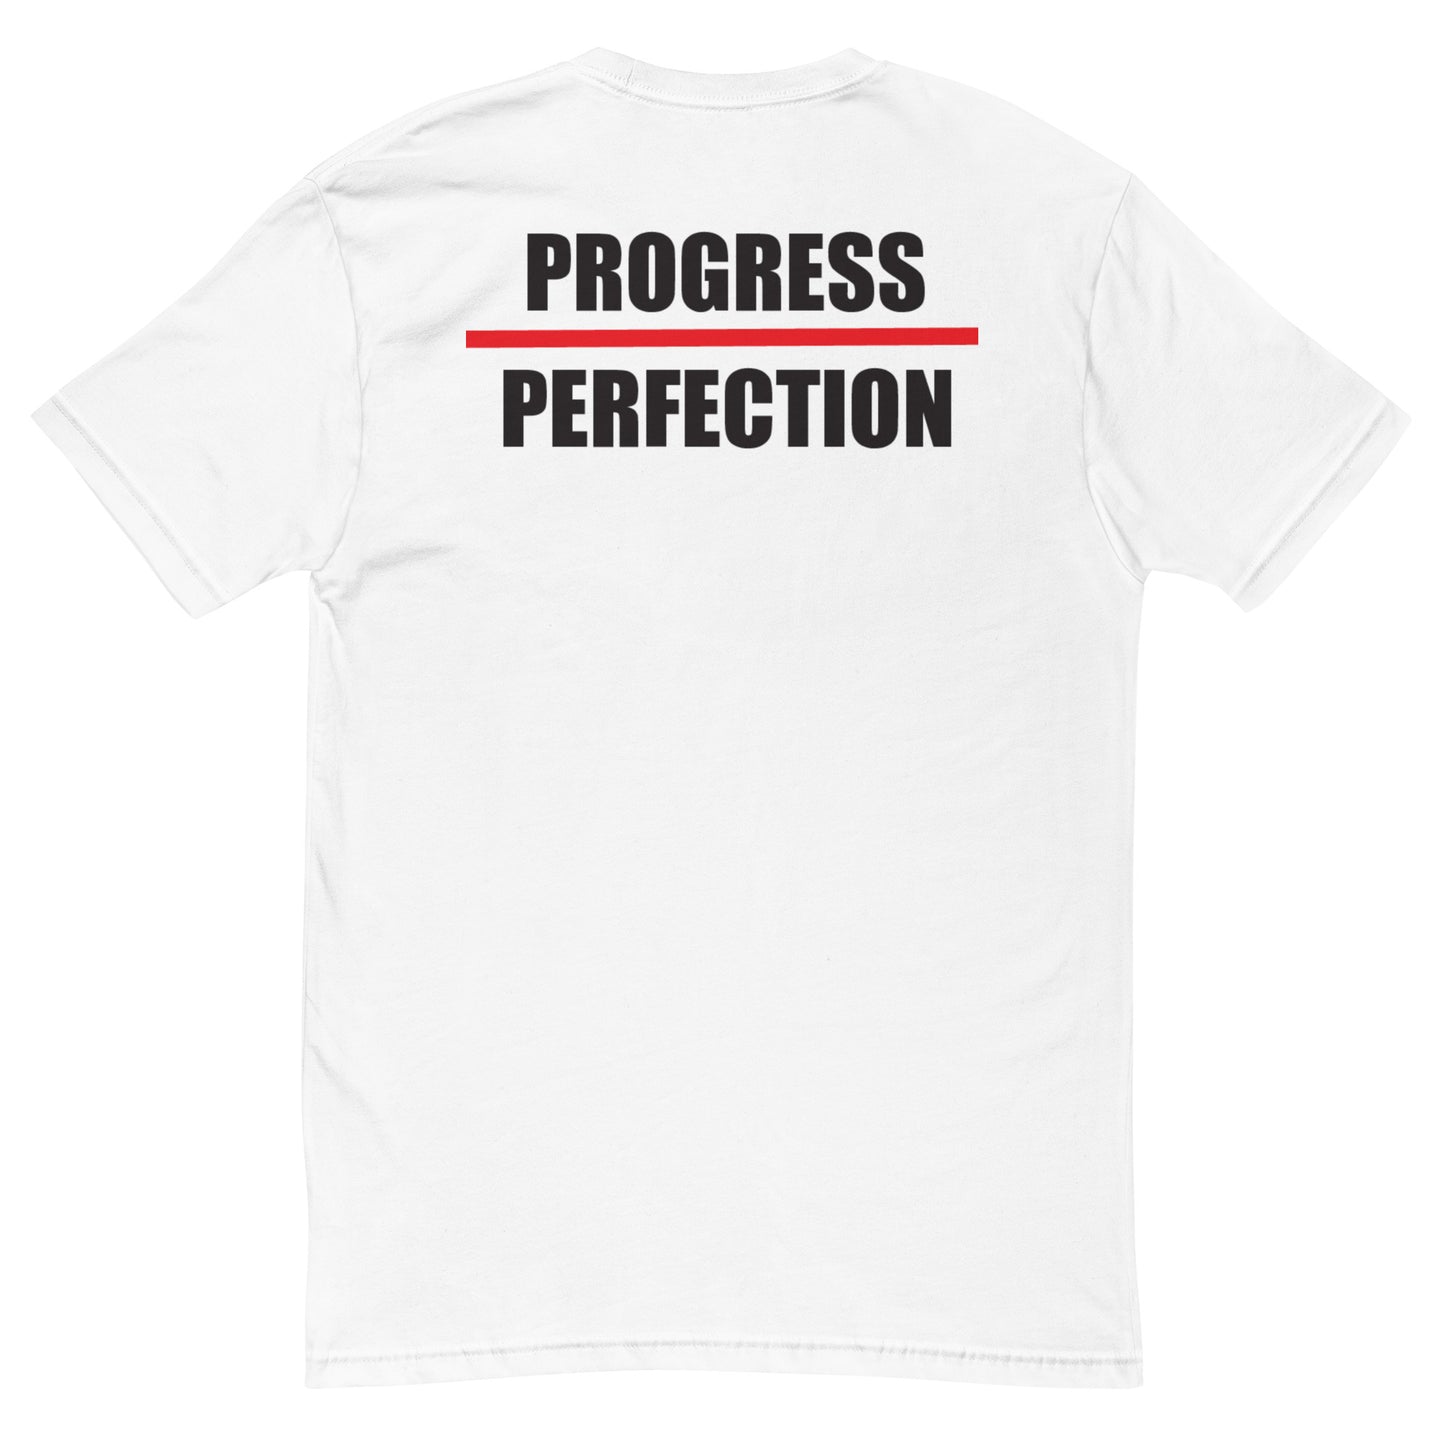 Progress Over Perfection (BLACK)